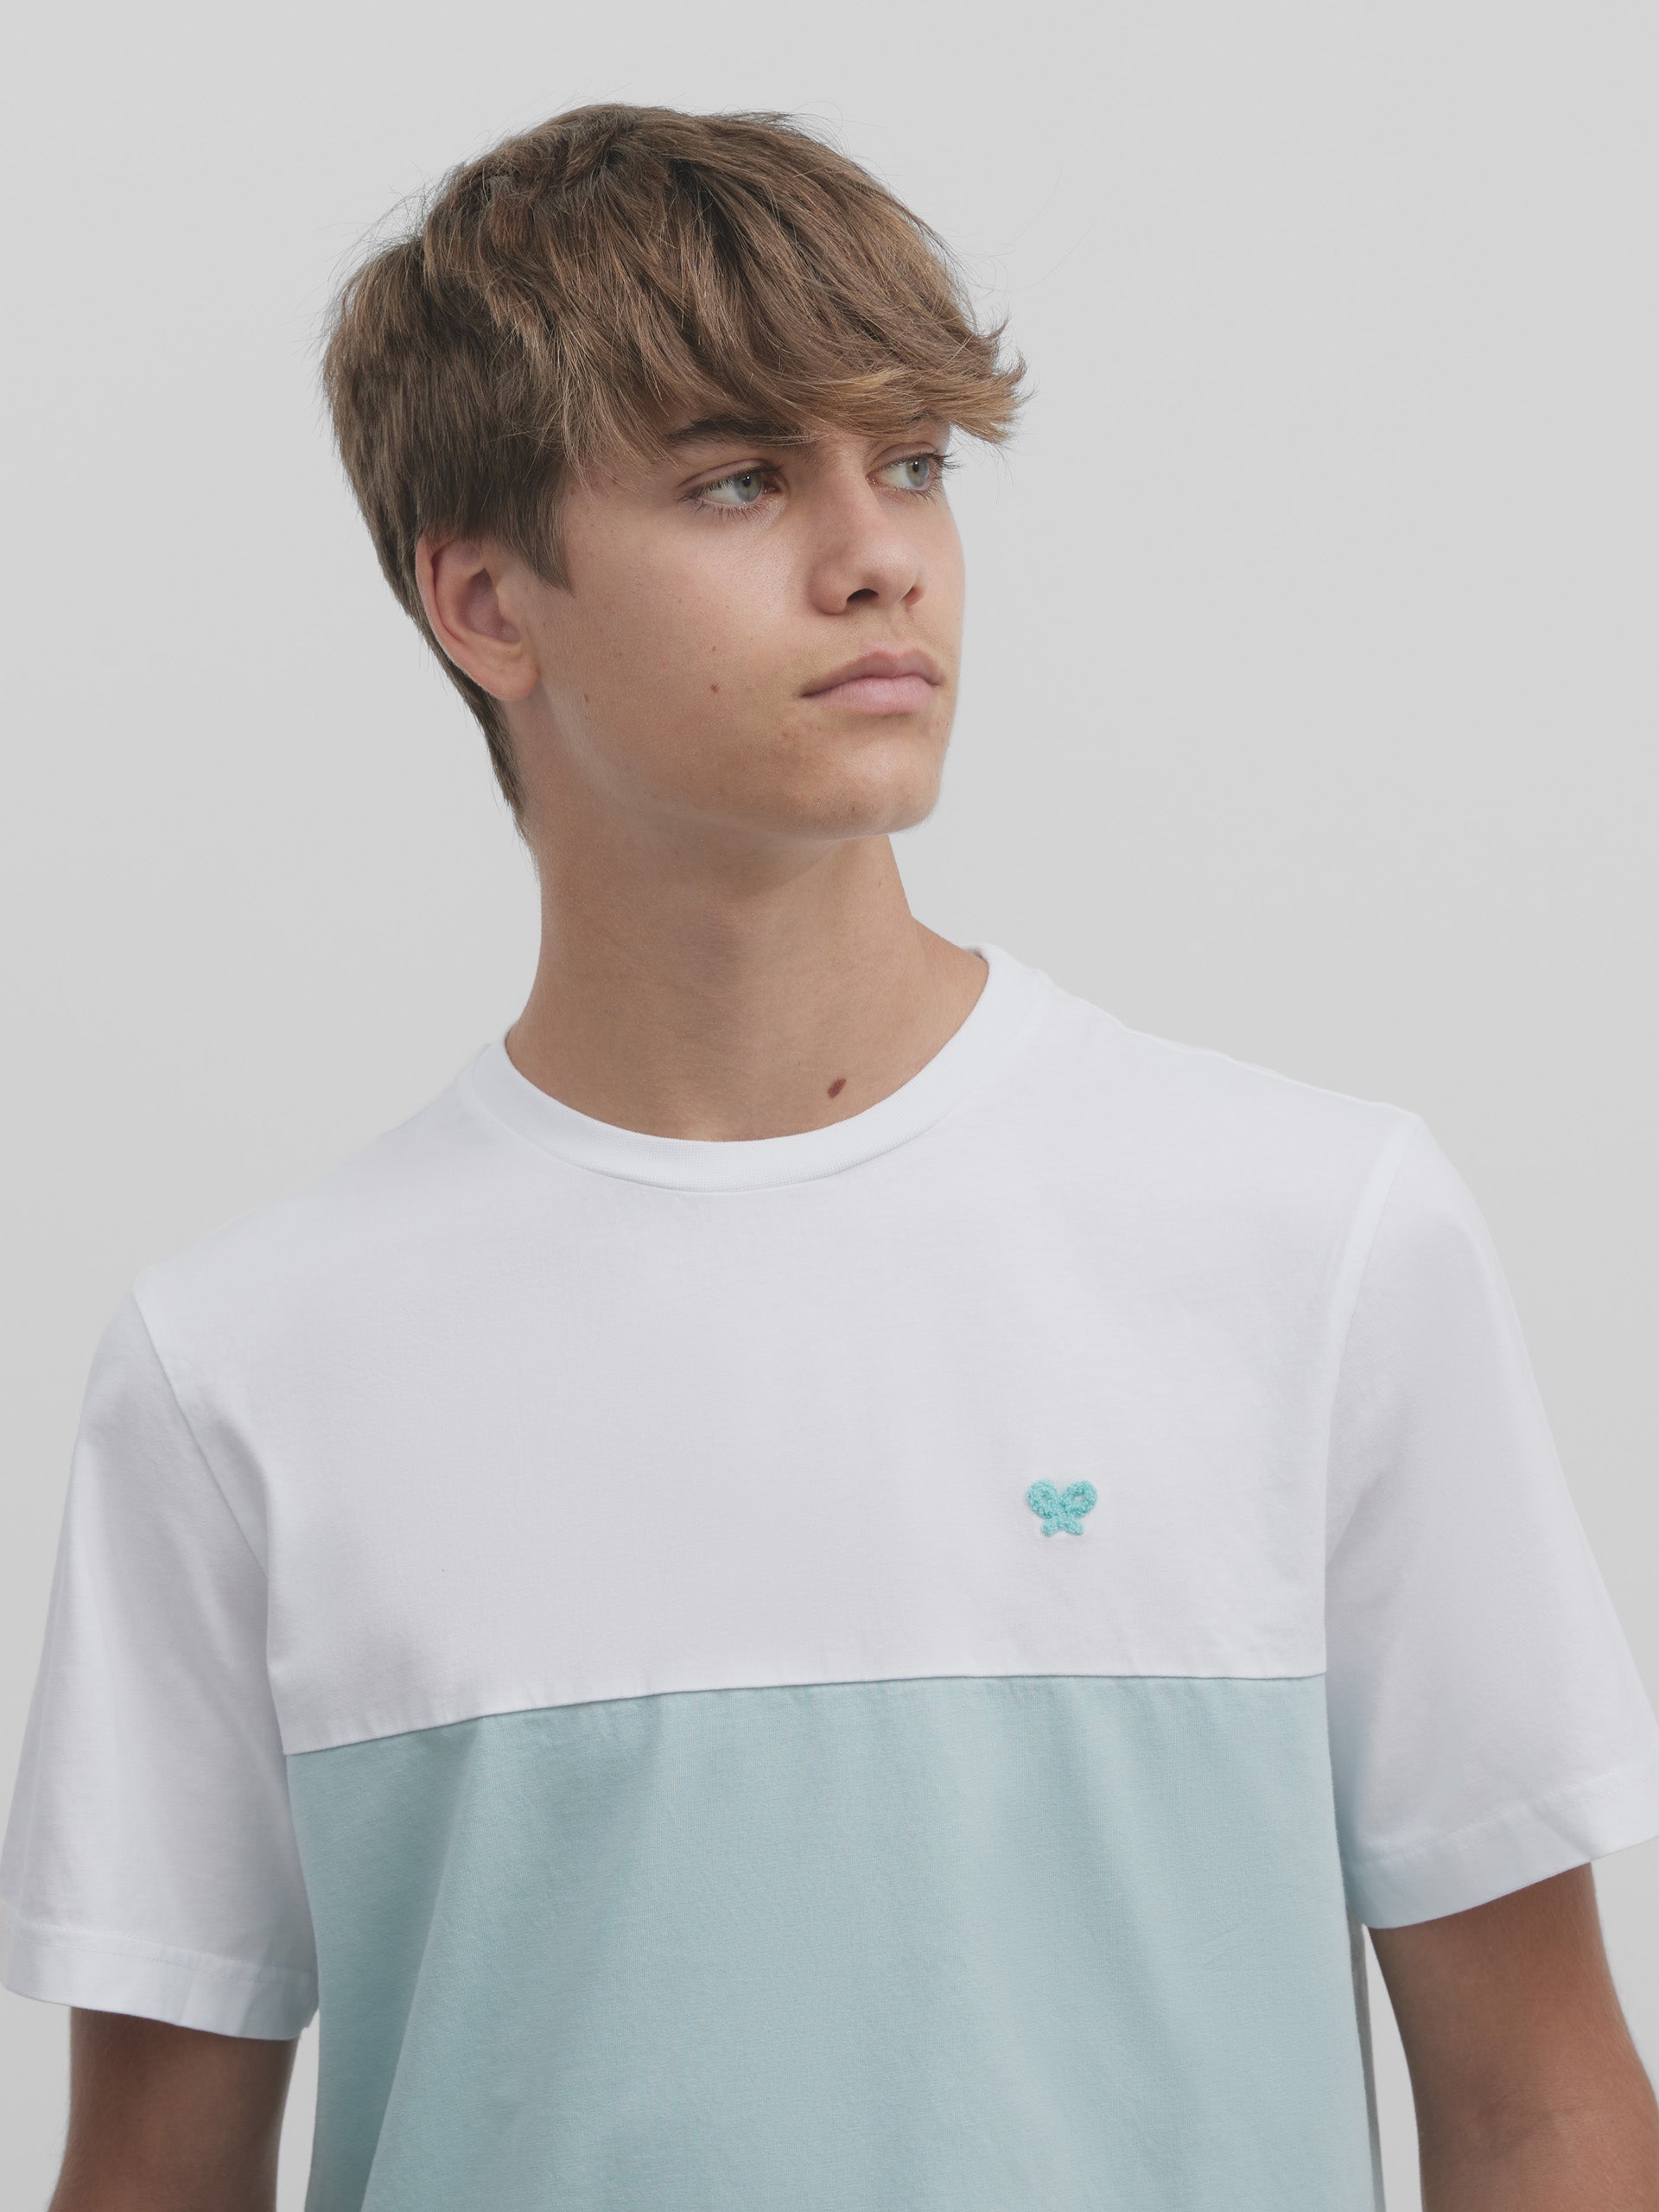 Two-tone aquamarine white t-shirt